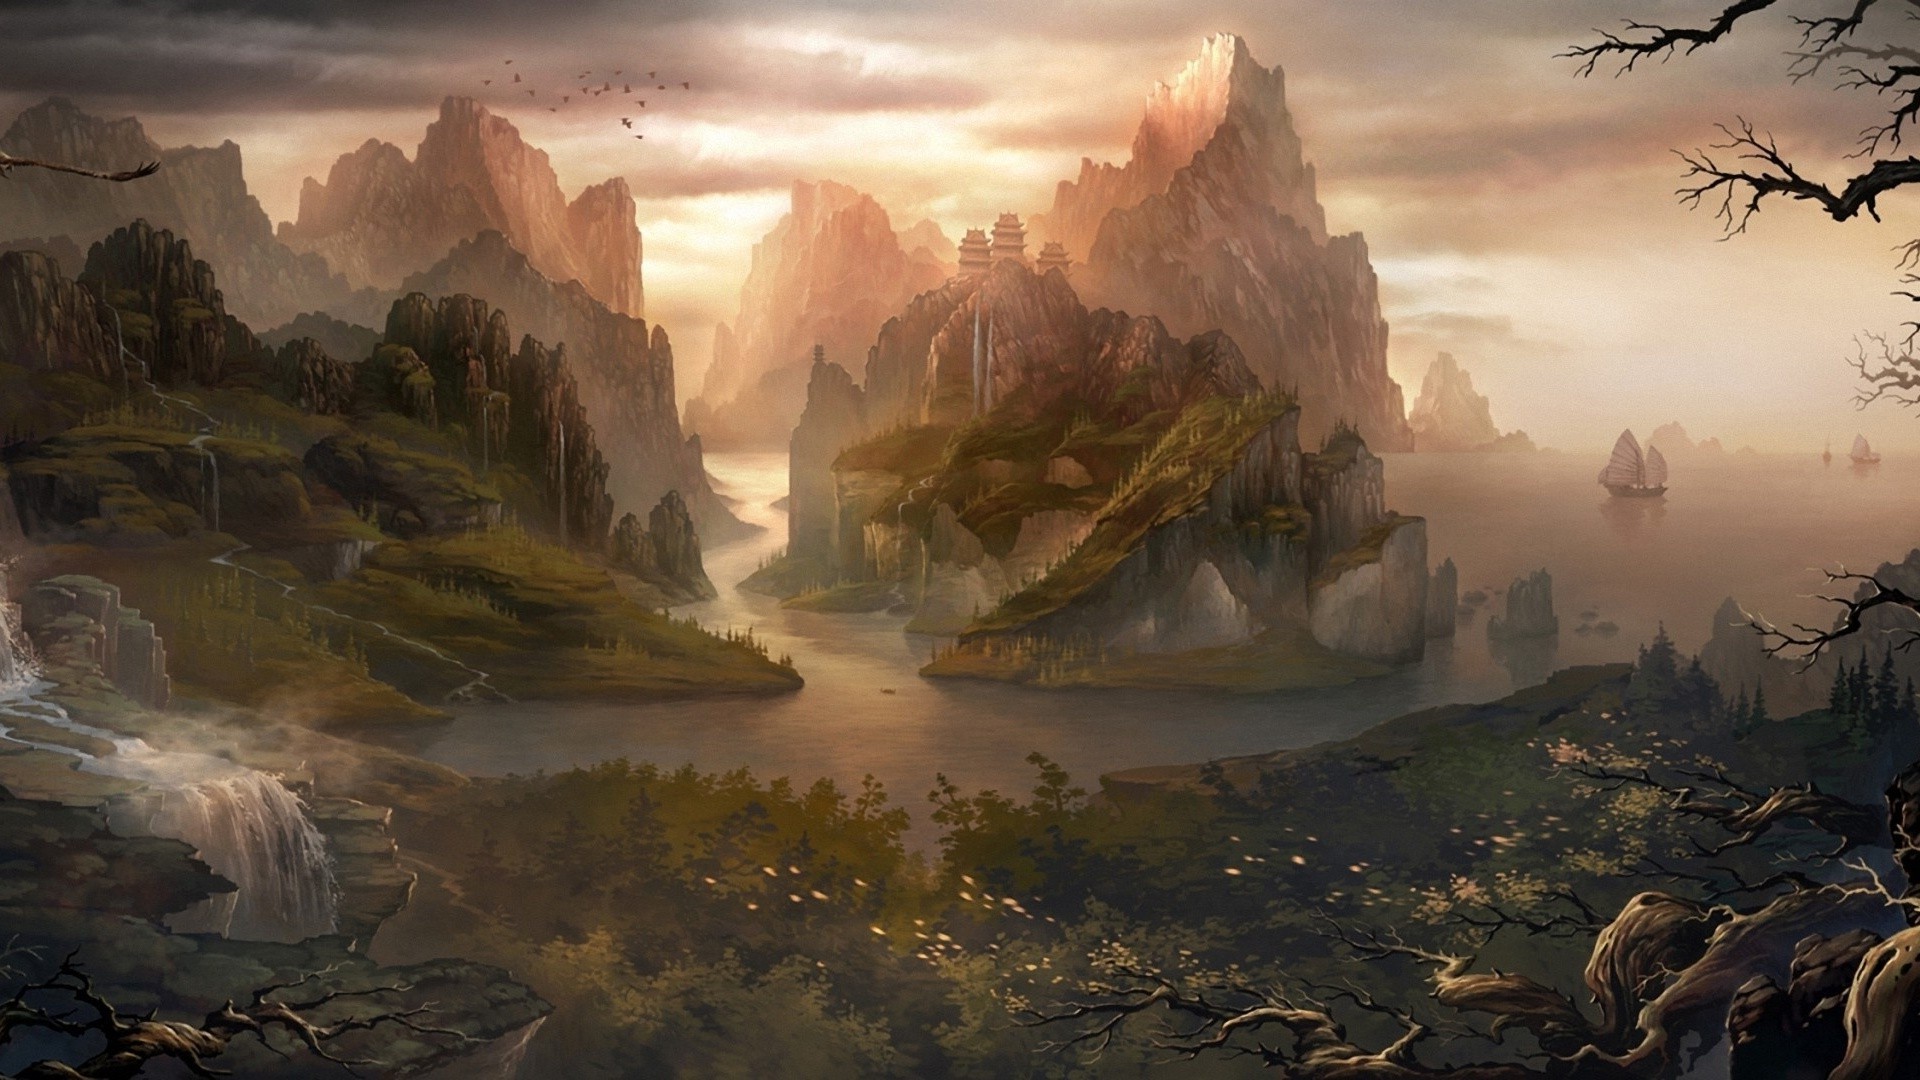 fantasy art wallpaper,nature,natural landscape,action adventure game,strategy video game,cg artwork